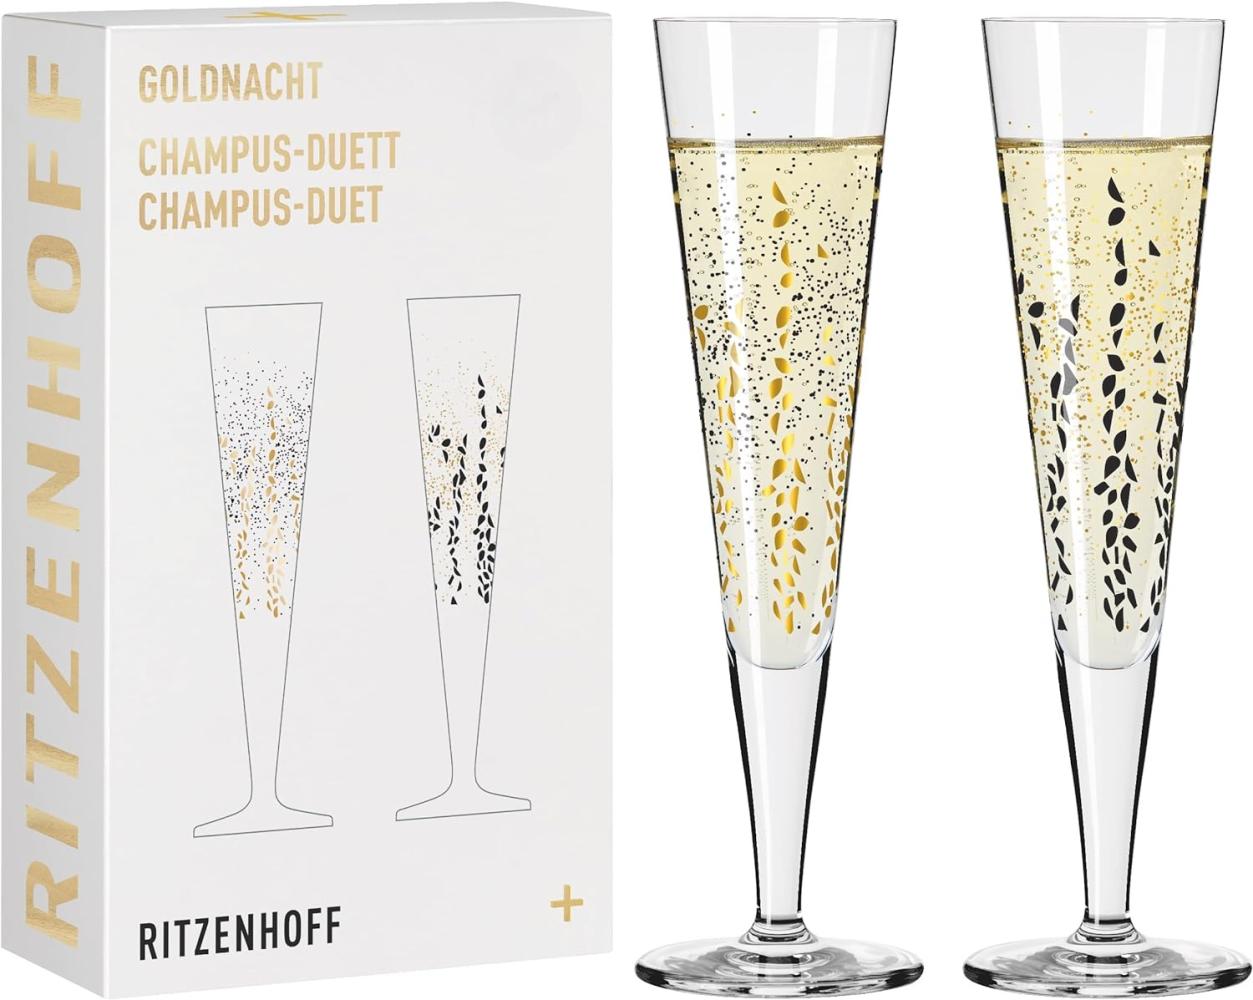 Ritzenhoff 6031005 Champagnerglas-Set H23 GOLDNACHT Romi Bohnenberg 2023 Bild 1